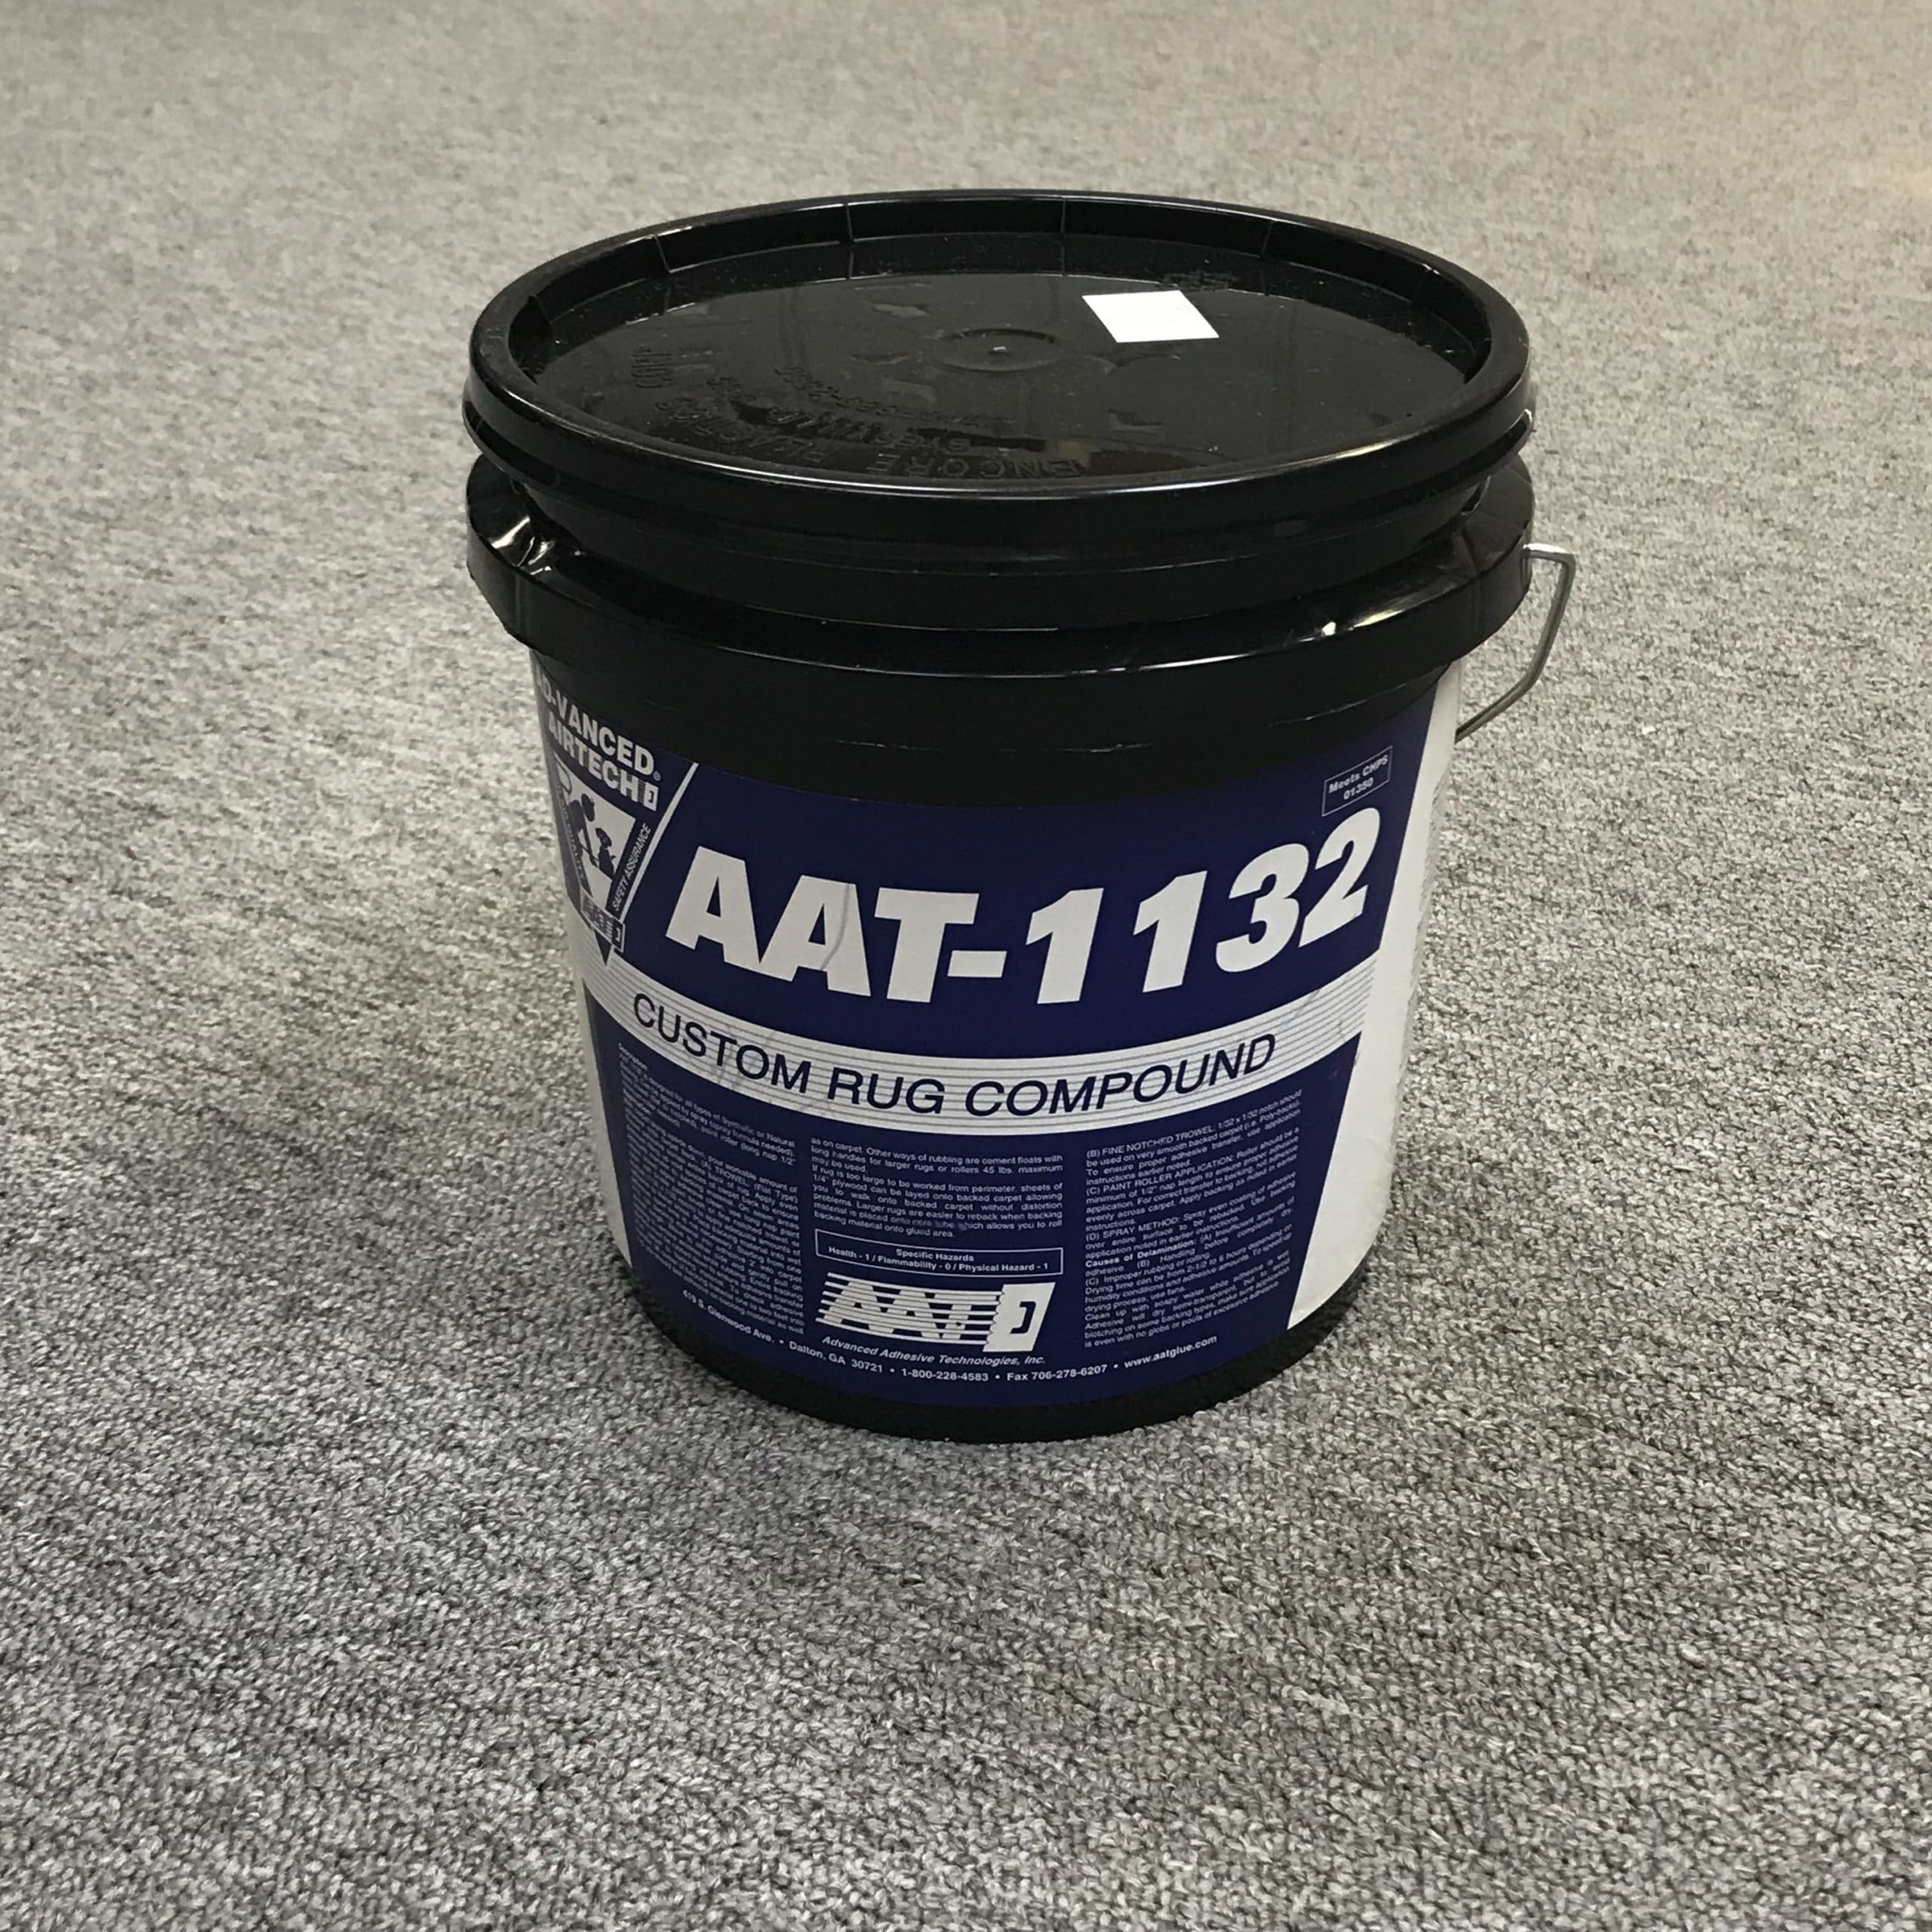 #1132 Synthetic Latex Custom Rug Compound 1 Gallon jug